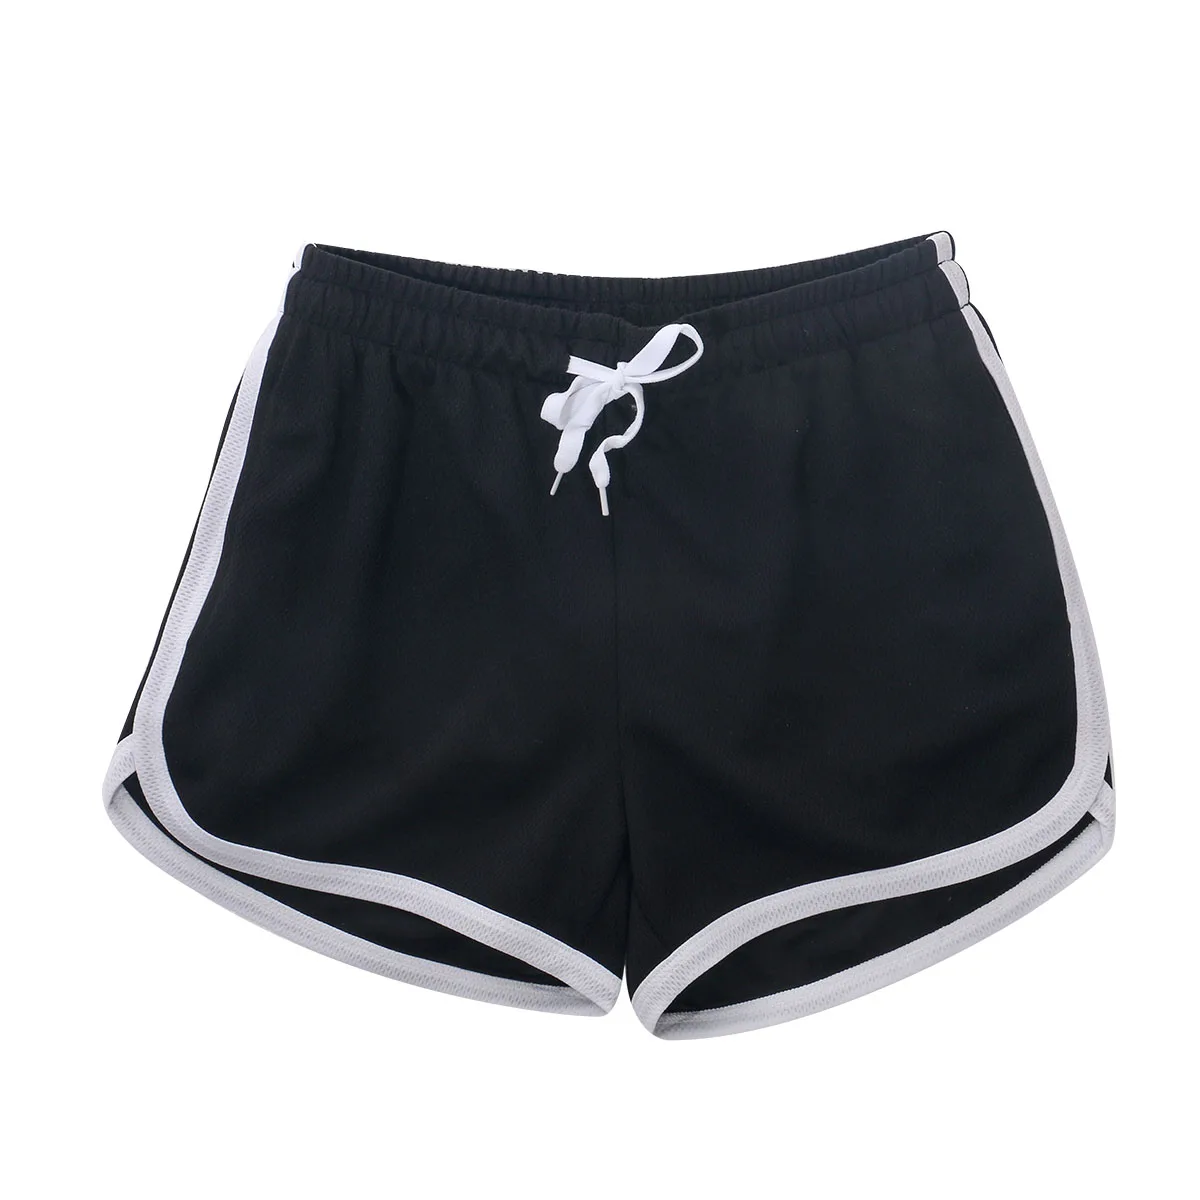 Men's Summer Breathable Quick Drying Shorts Gym Sports Running Sleepwear Casual Sport Short Pants Beachwear Shorts